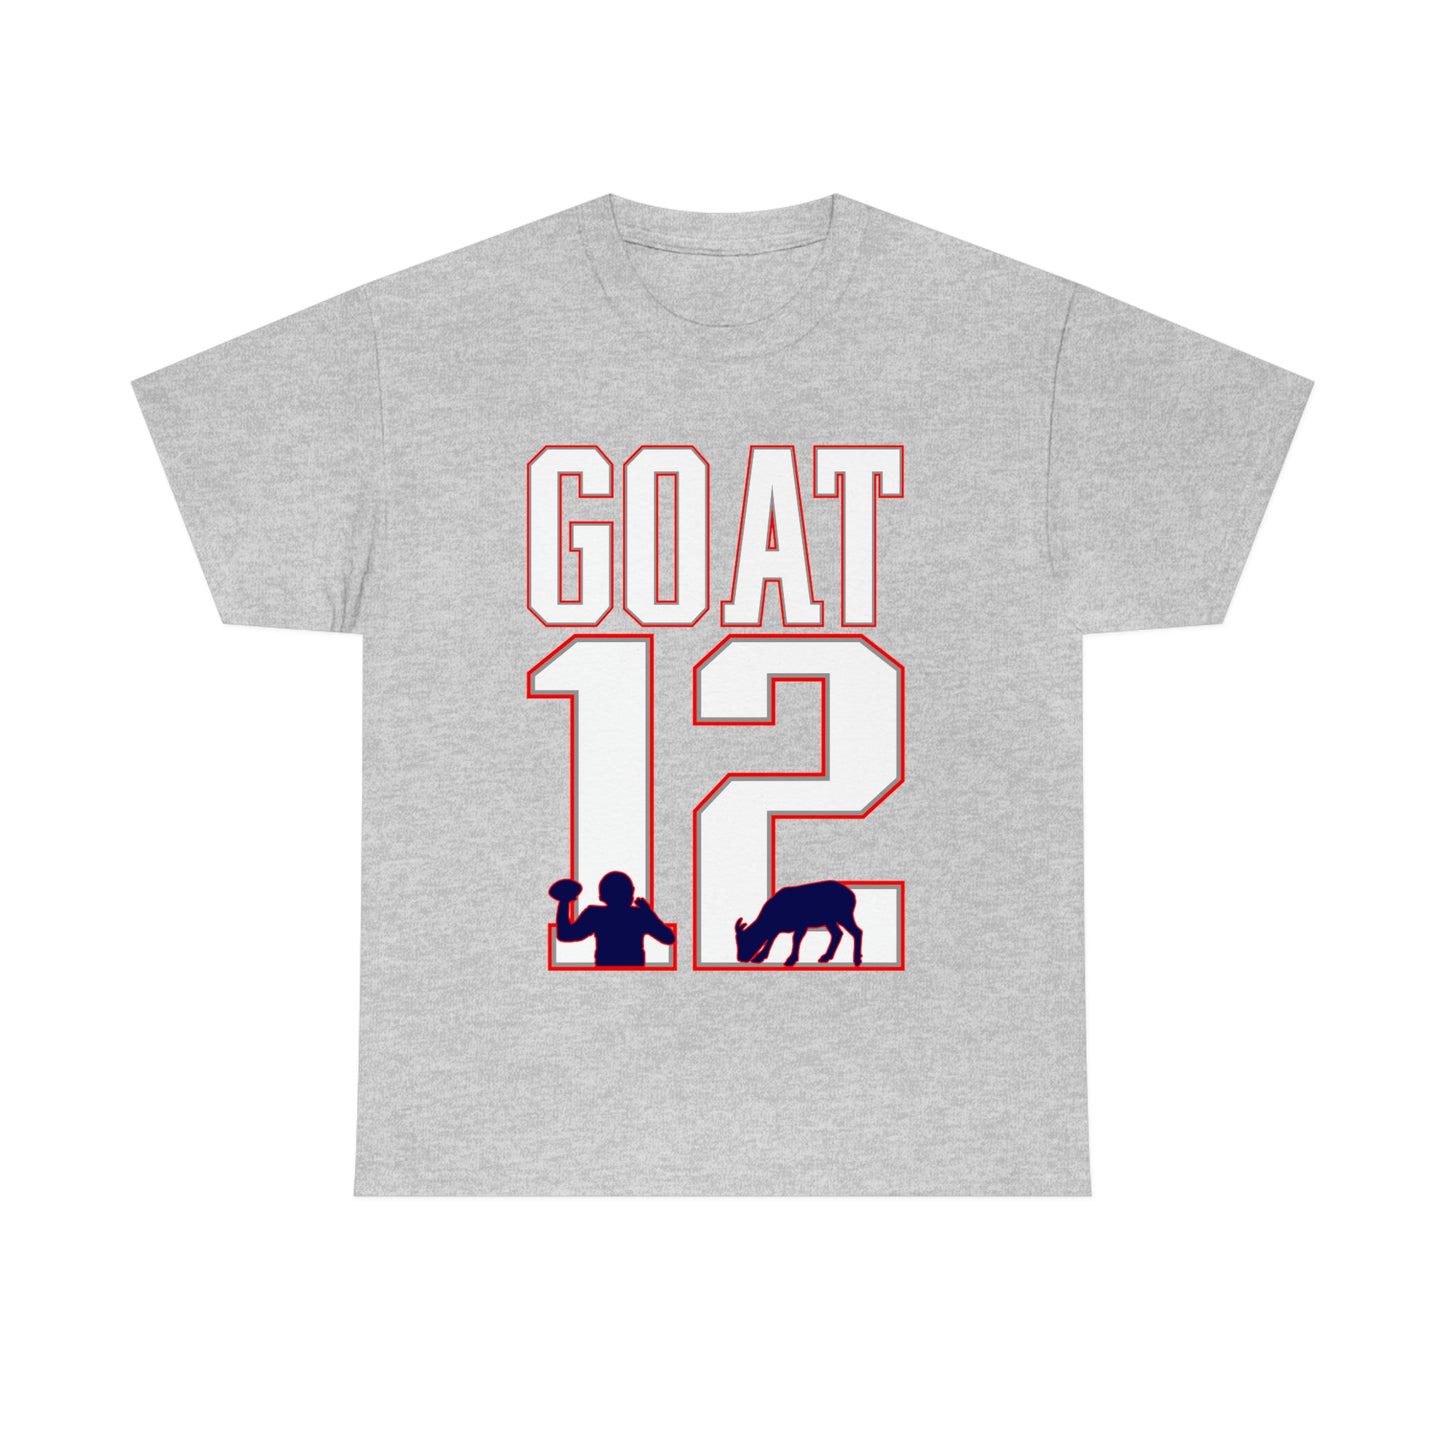 Tom Brady "The GOAT, #12" T-Shirt